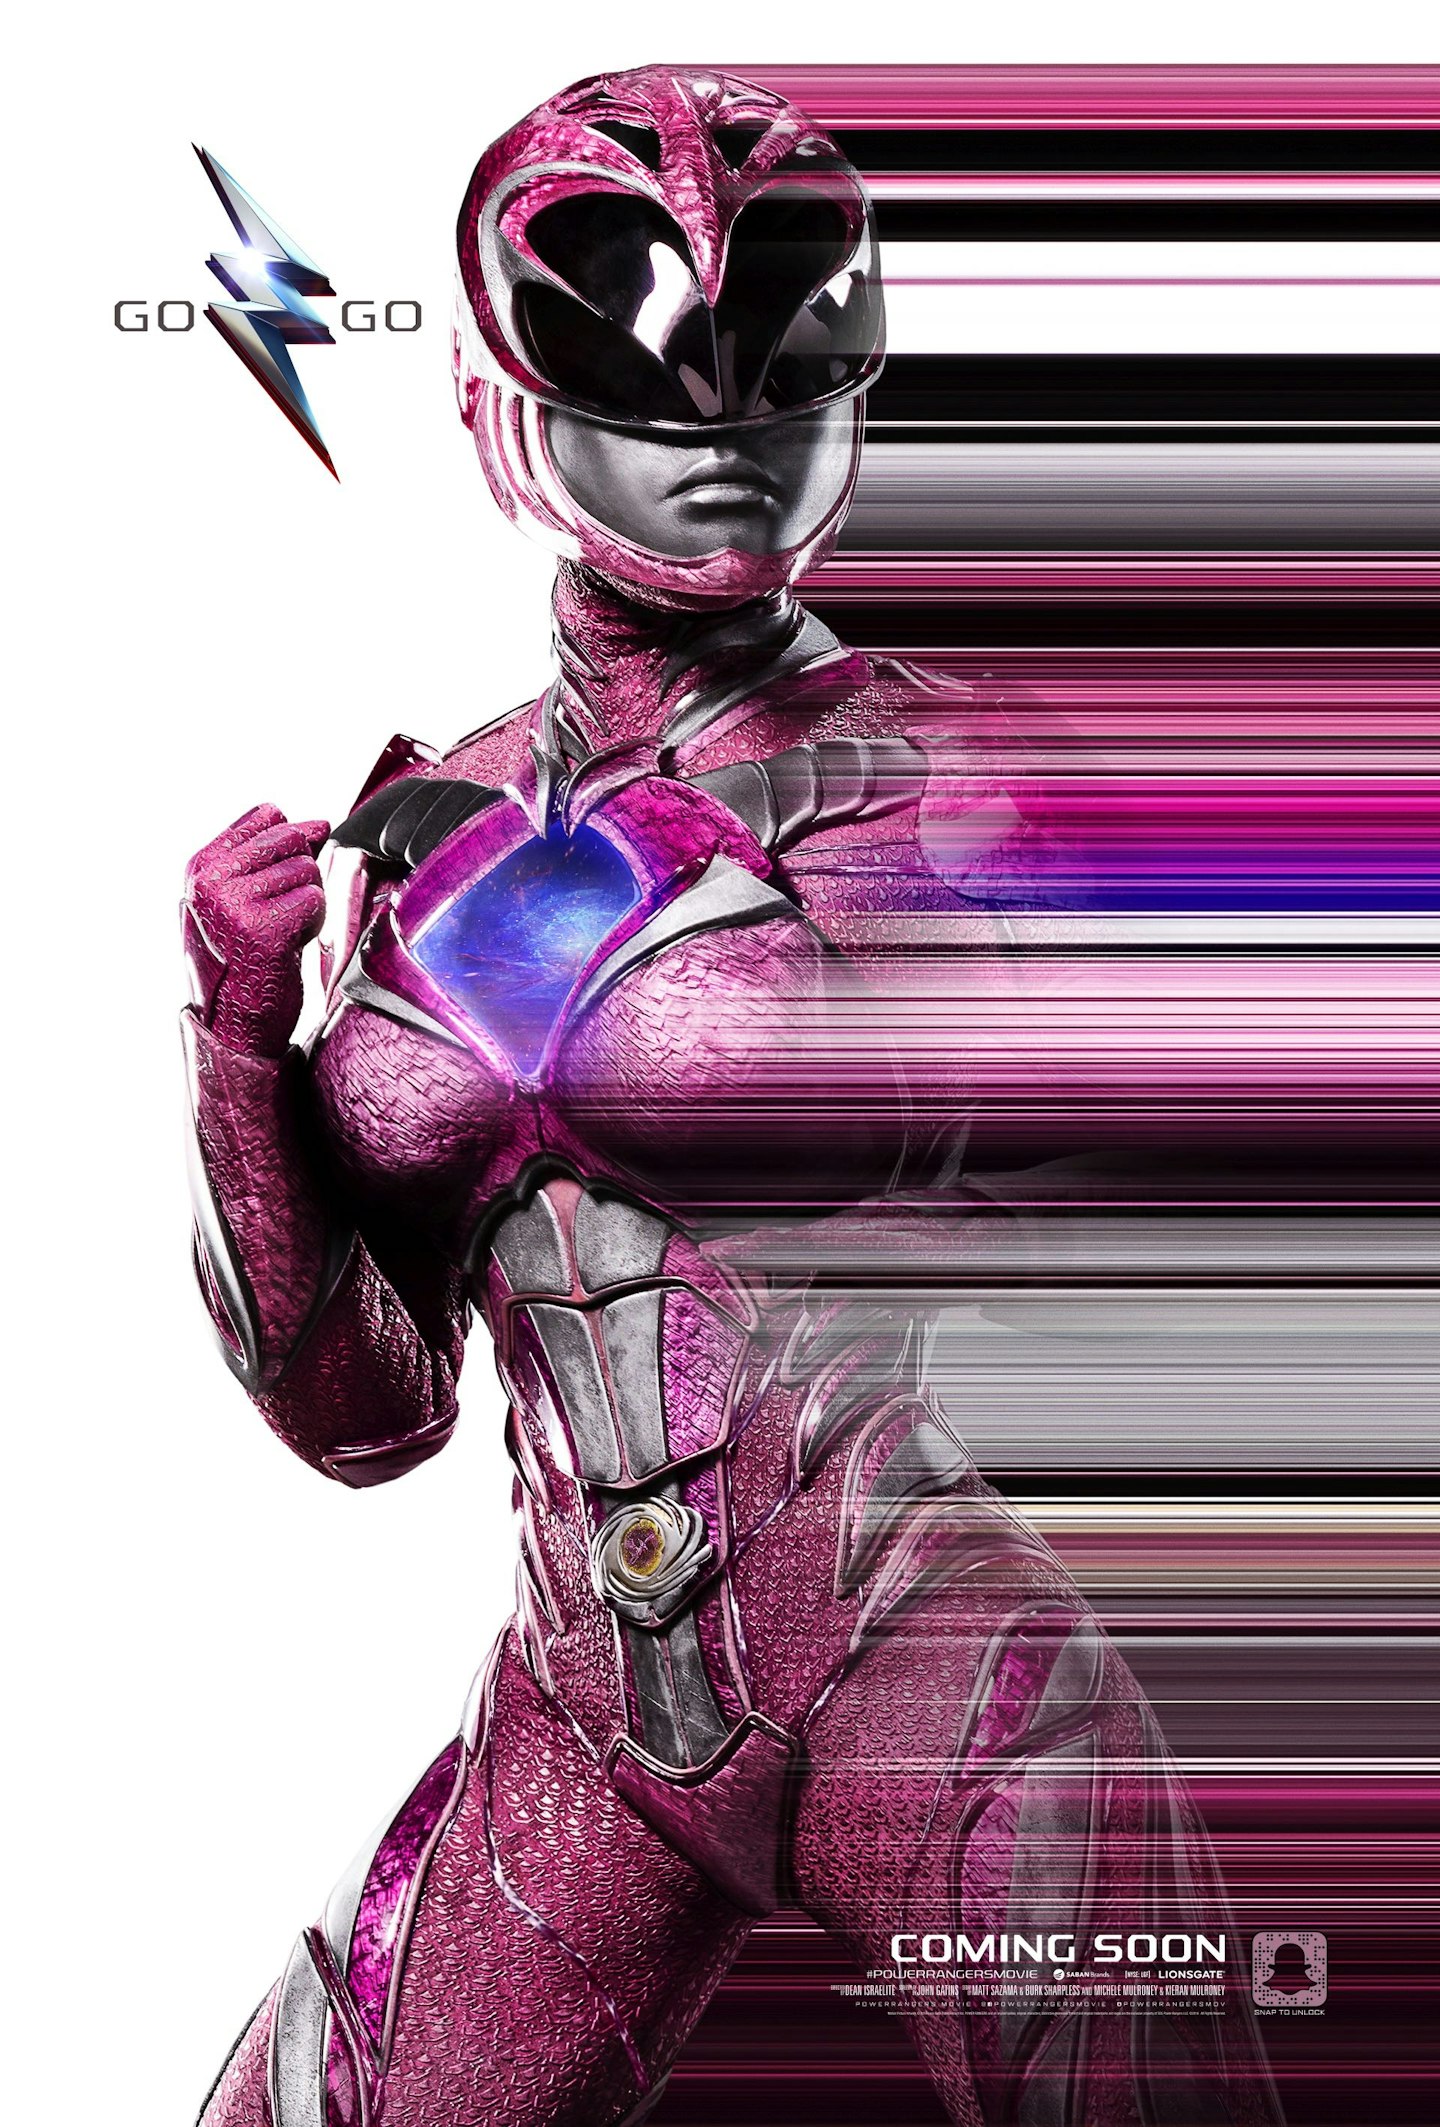 Power Rangers suit streak character posters